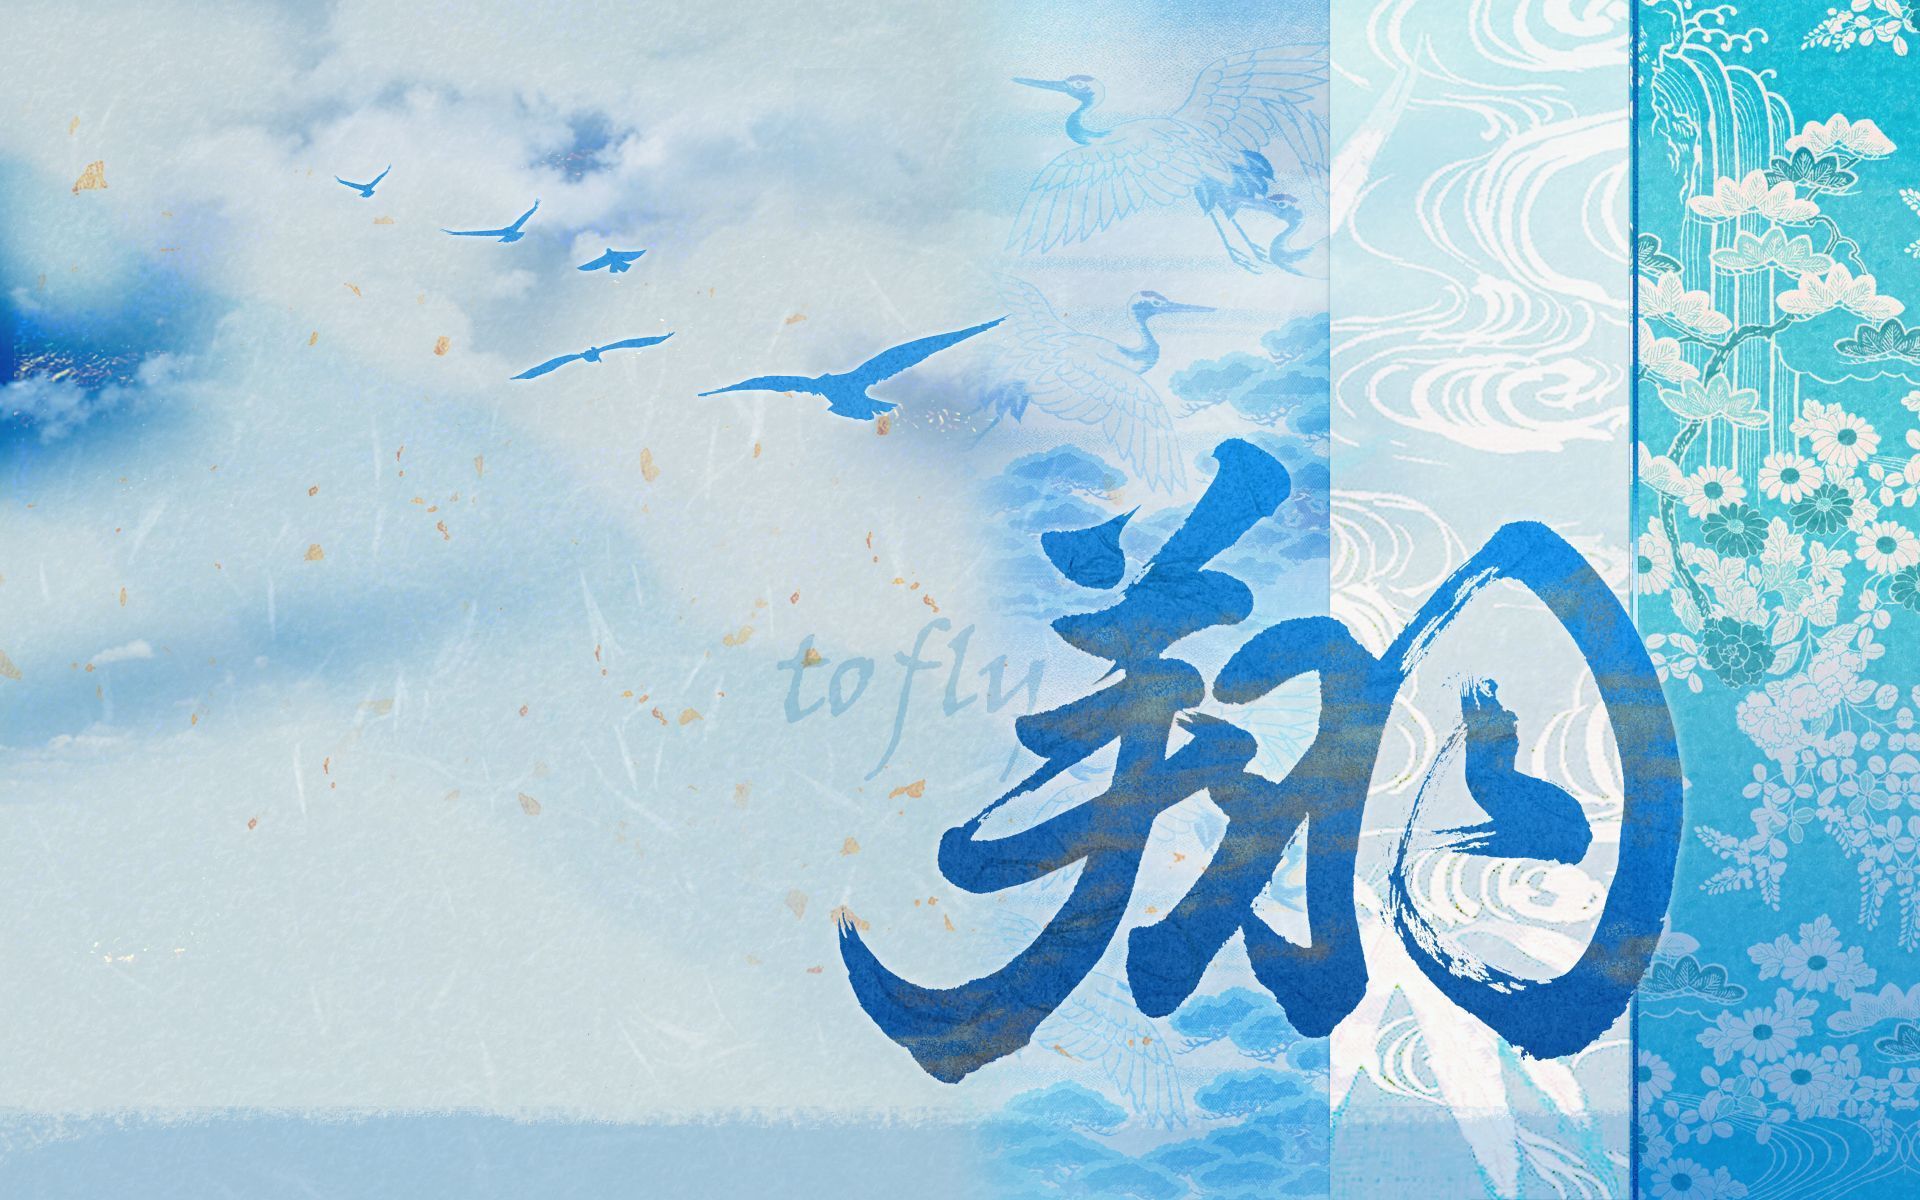 Beautiful desktop background inspired by Japanese Kanji. You